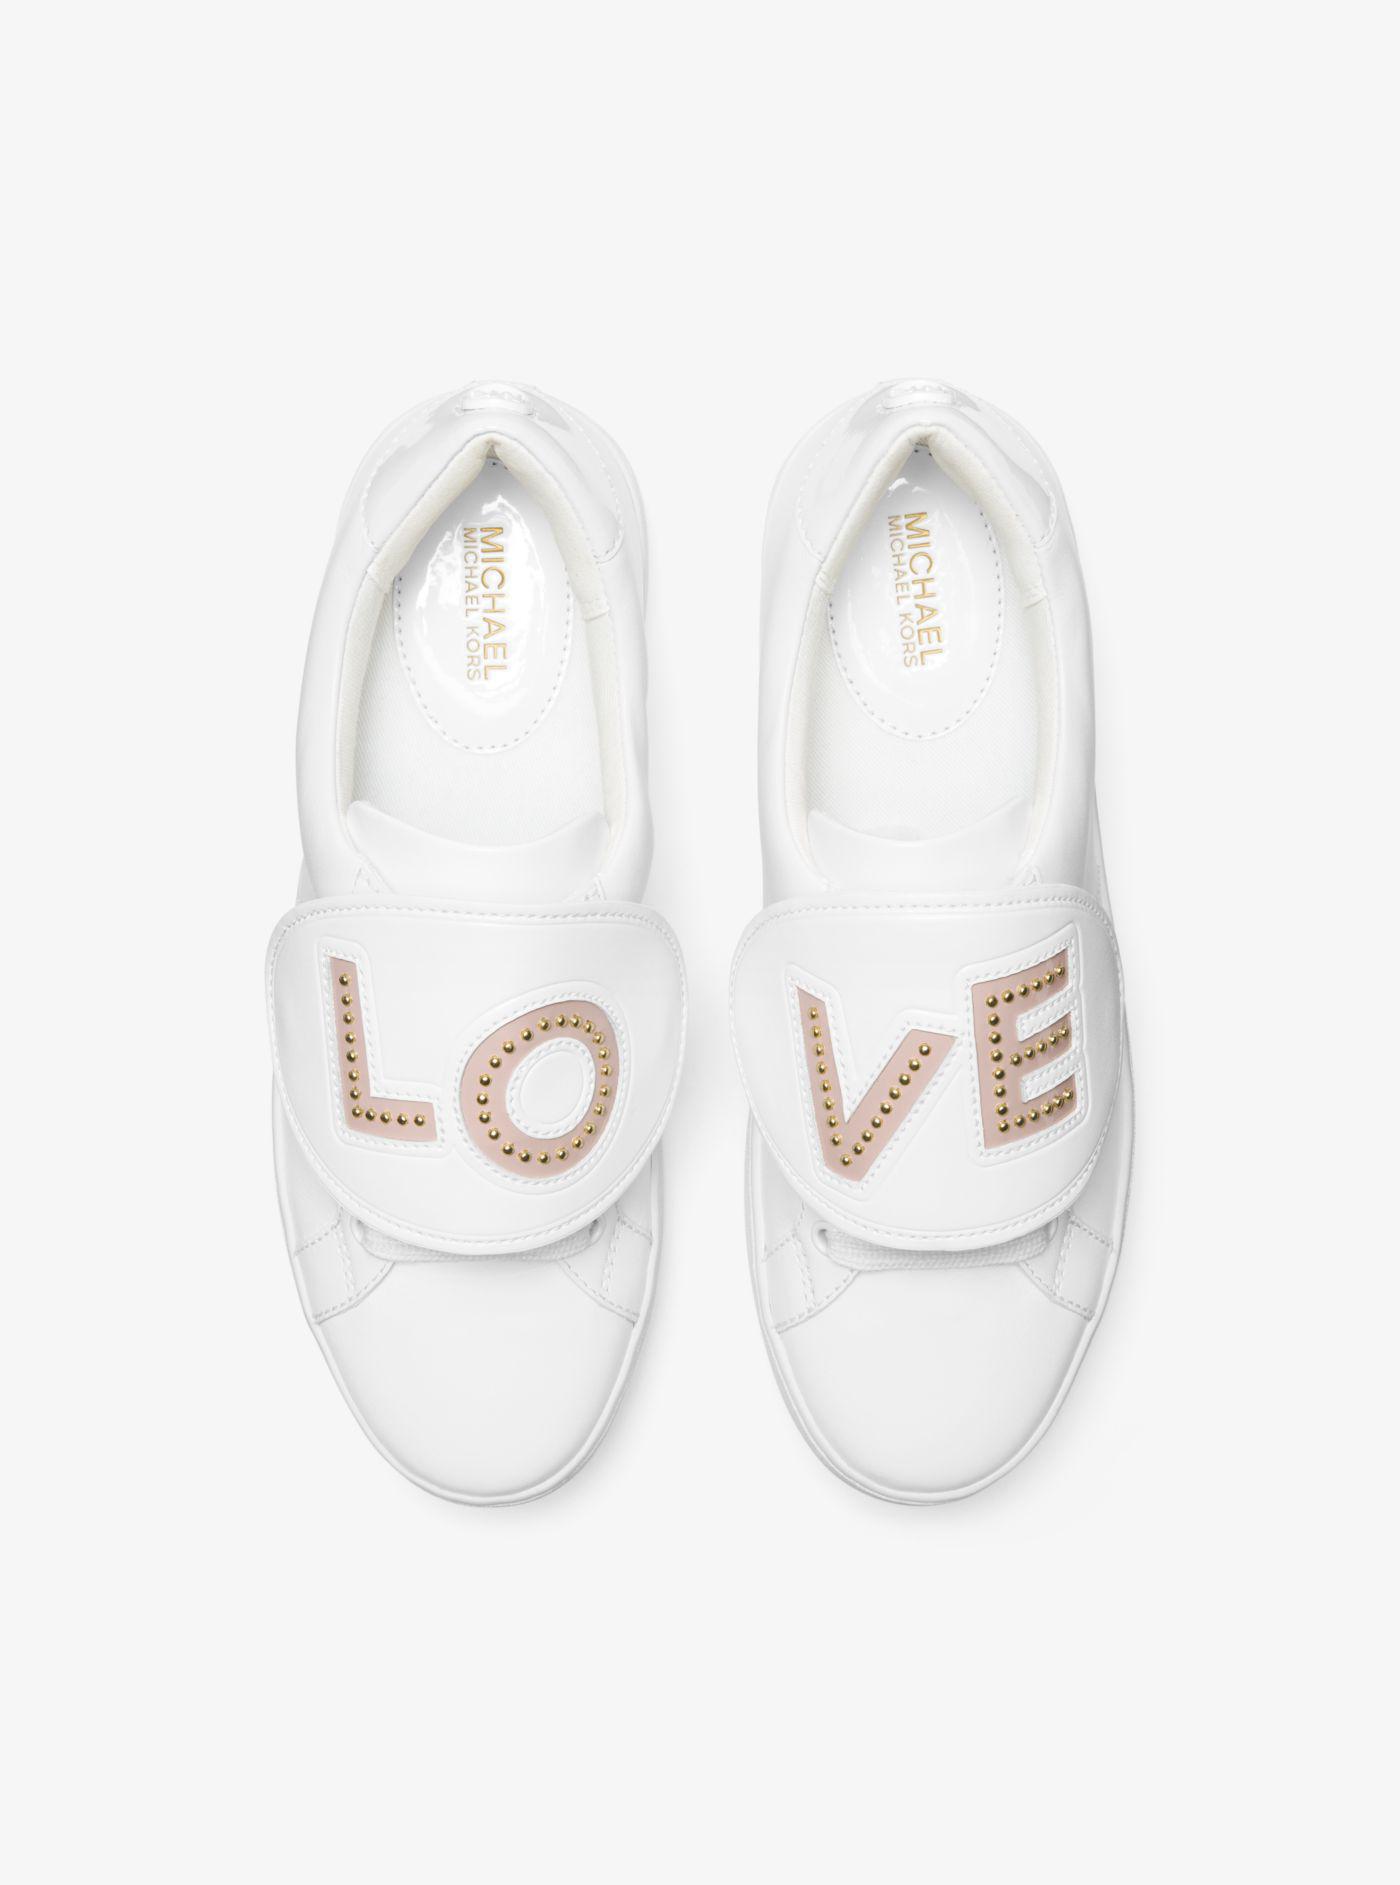 Michael Kors Leighton Leather Sneakers 